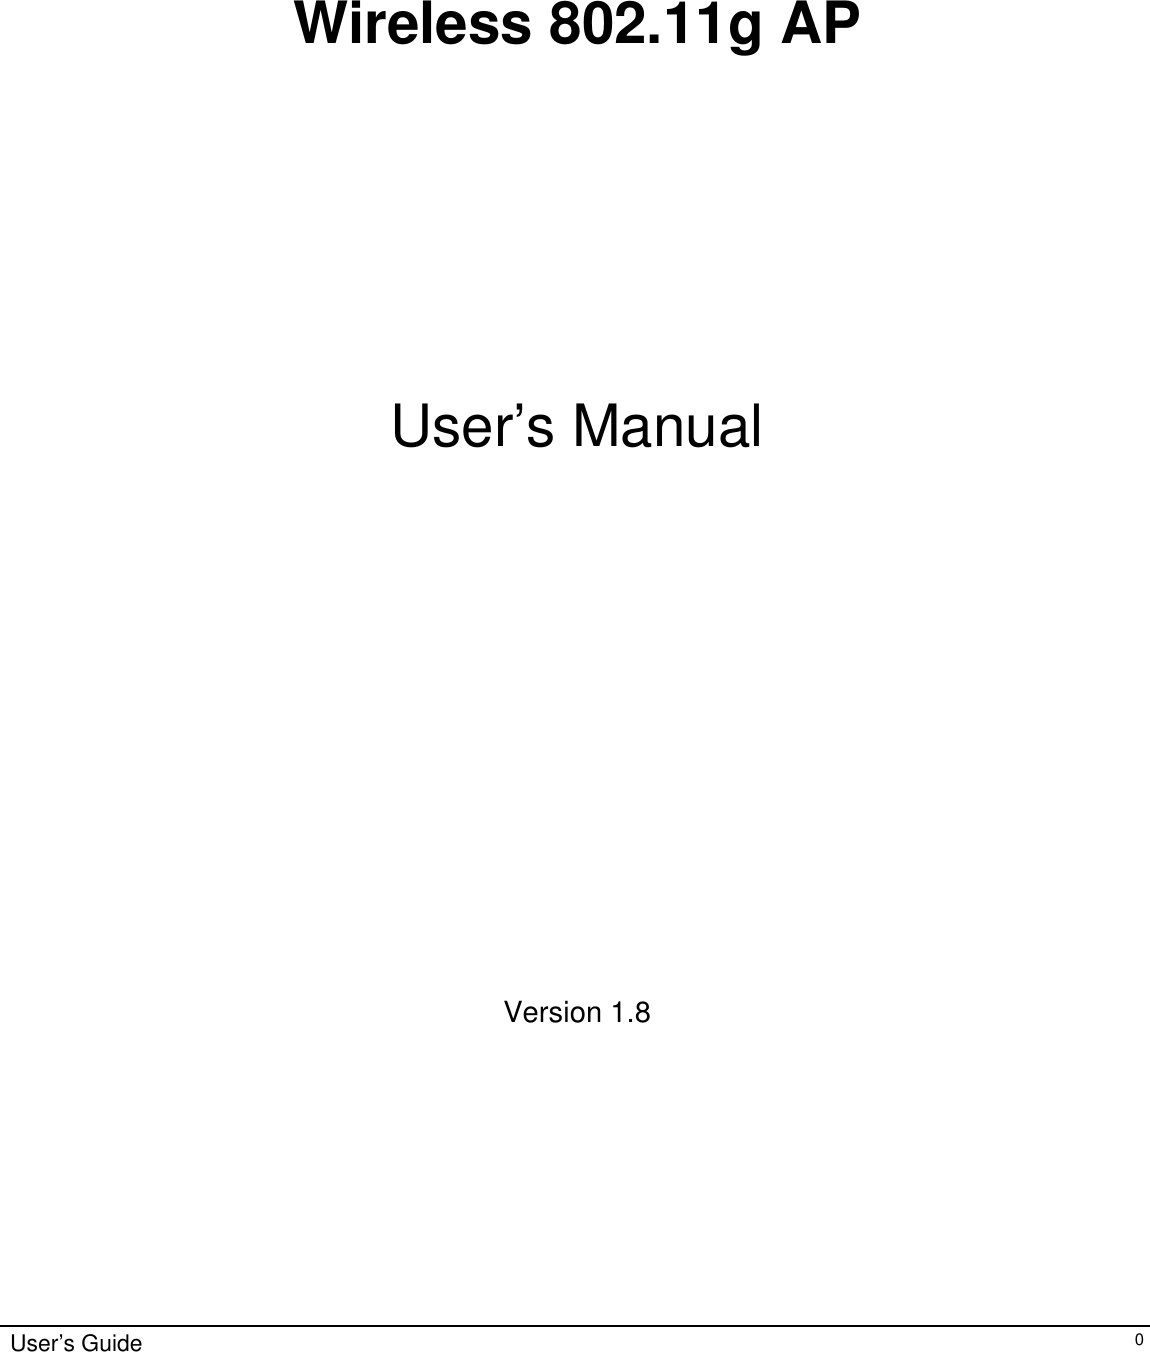                  Wireless 802.11g AP       User’s Manual              Version 1.8        User’s Guide   0